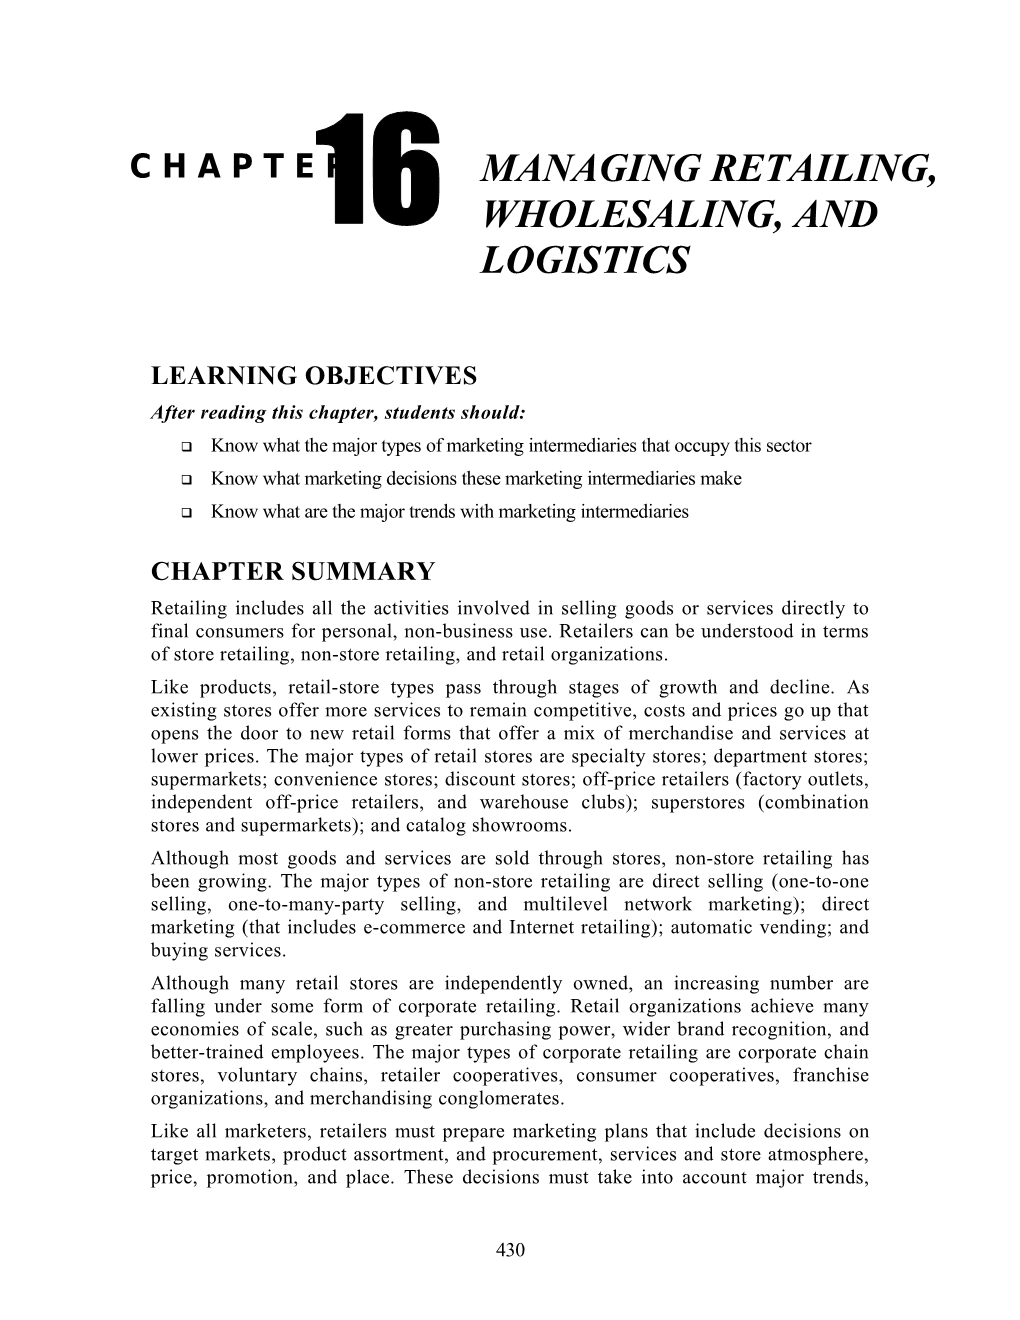 Chapter 16: Managing Retailing, Wholesaling, and Logistics